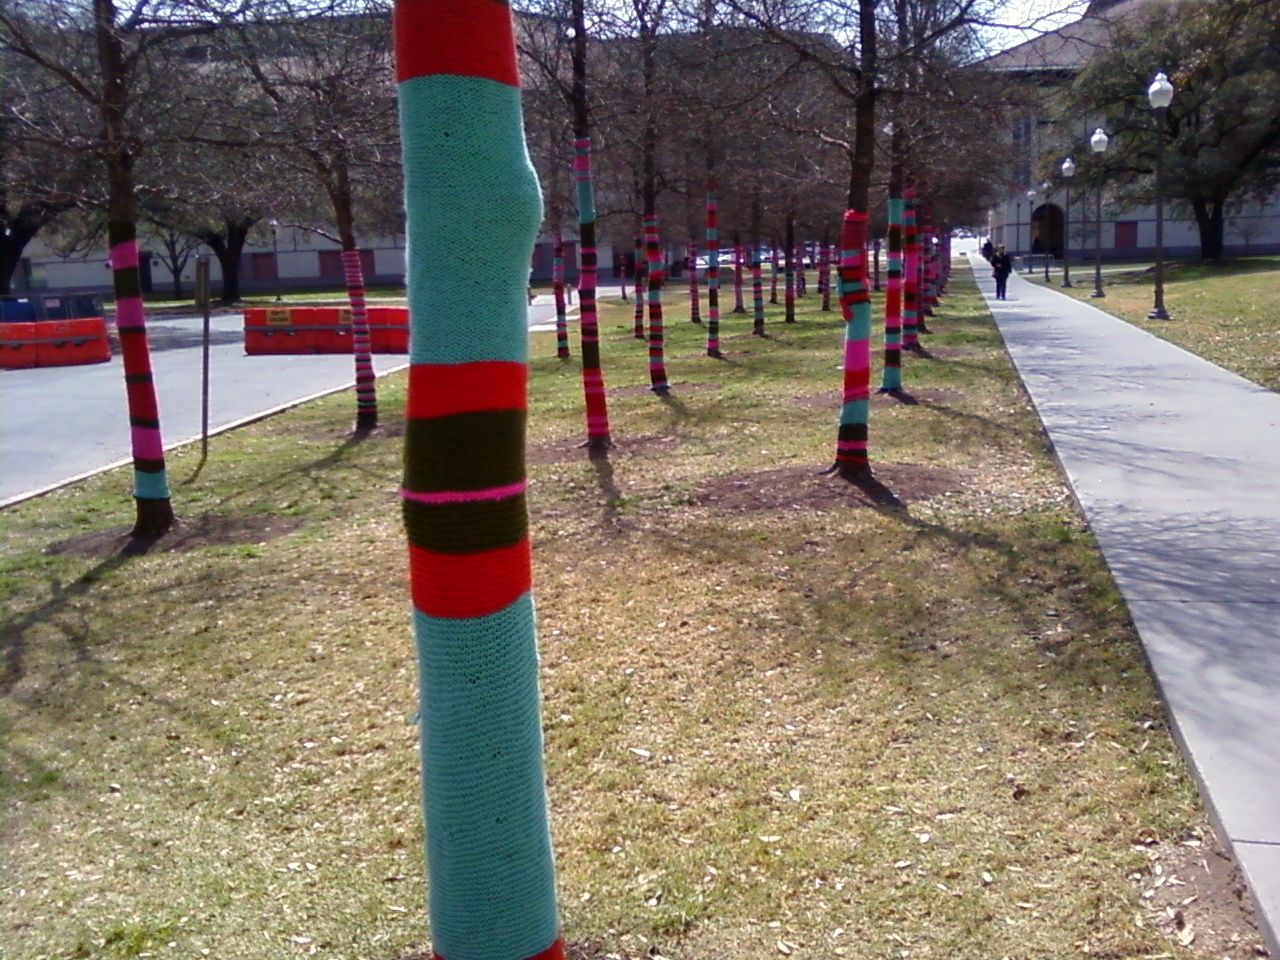 The yarn trees